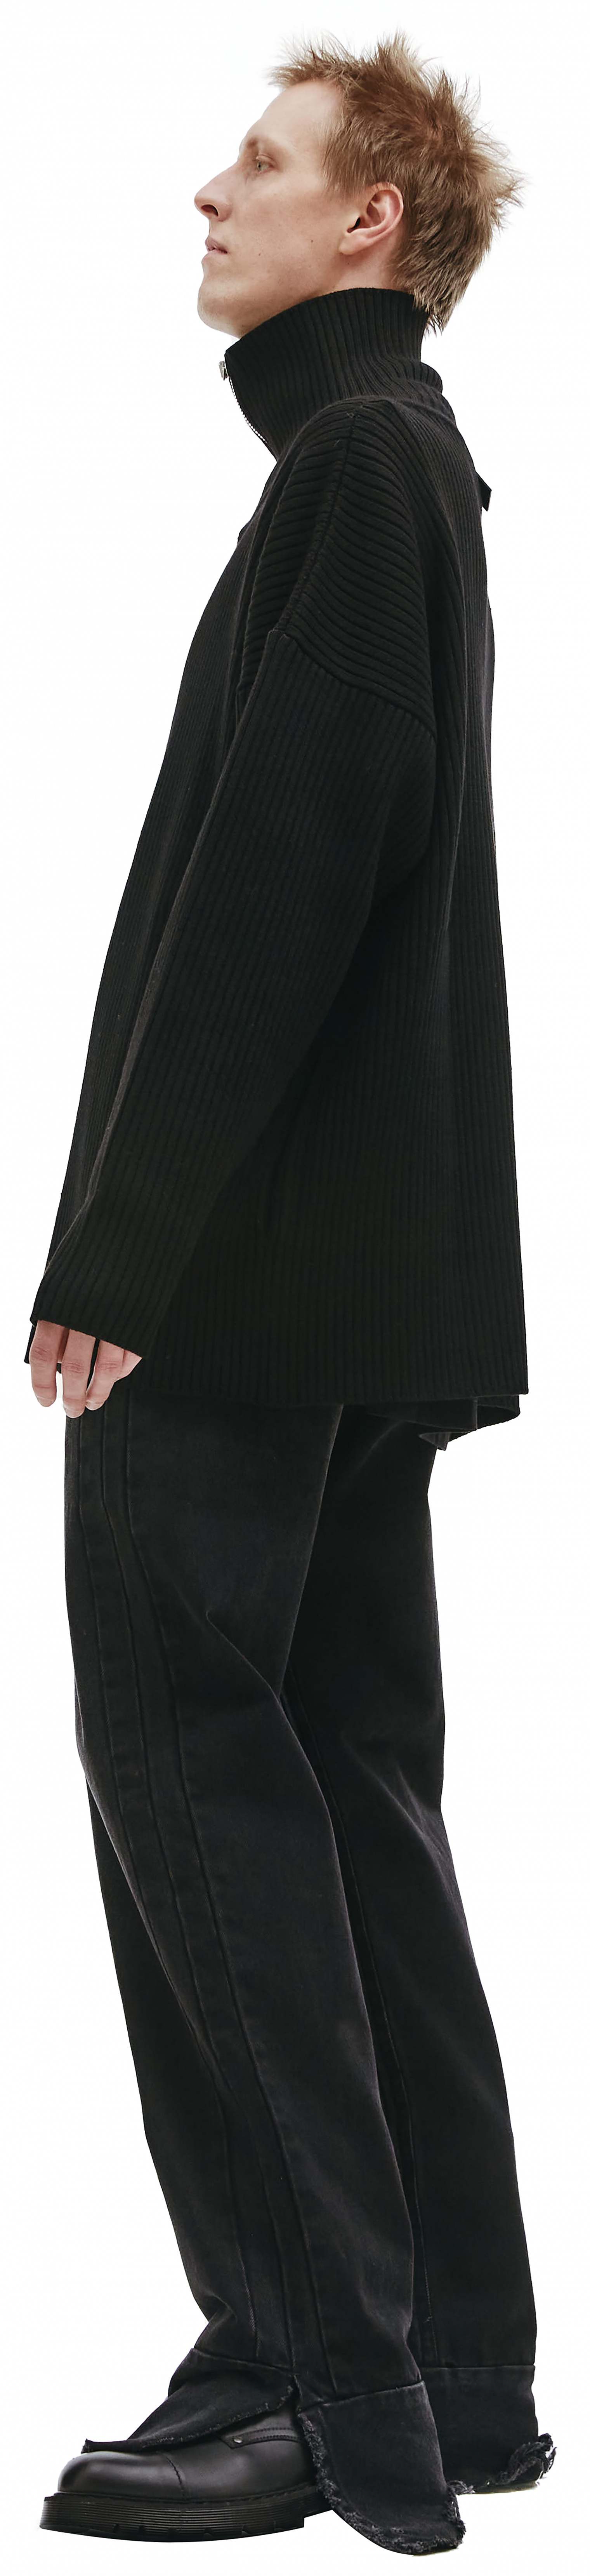 VETEMENTS Black wool zipped cardigan